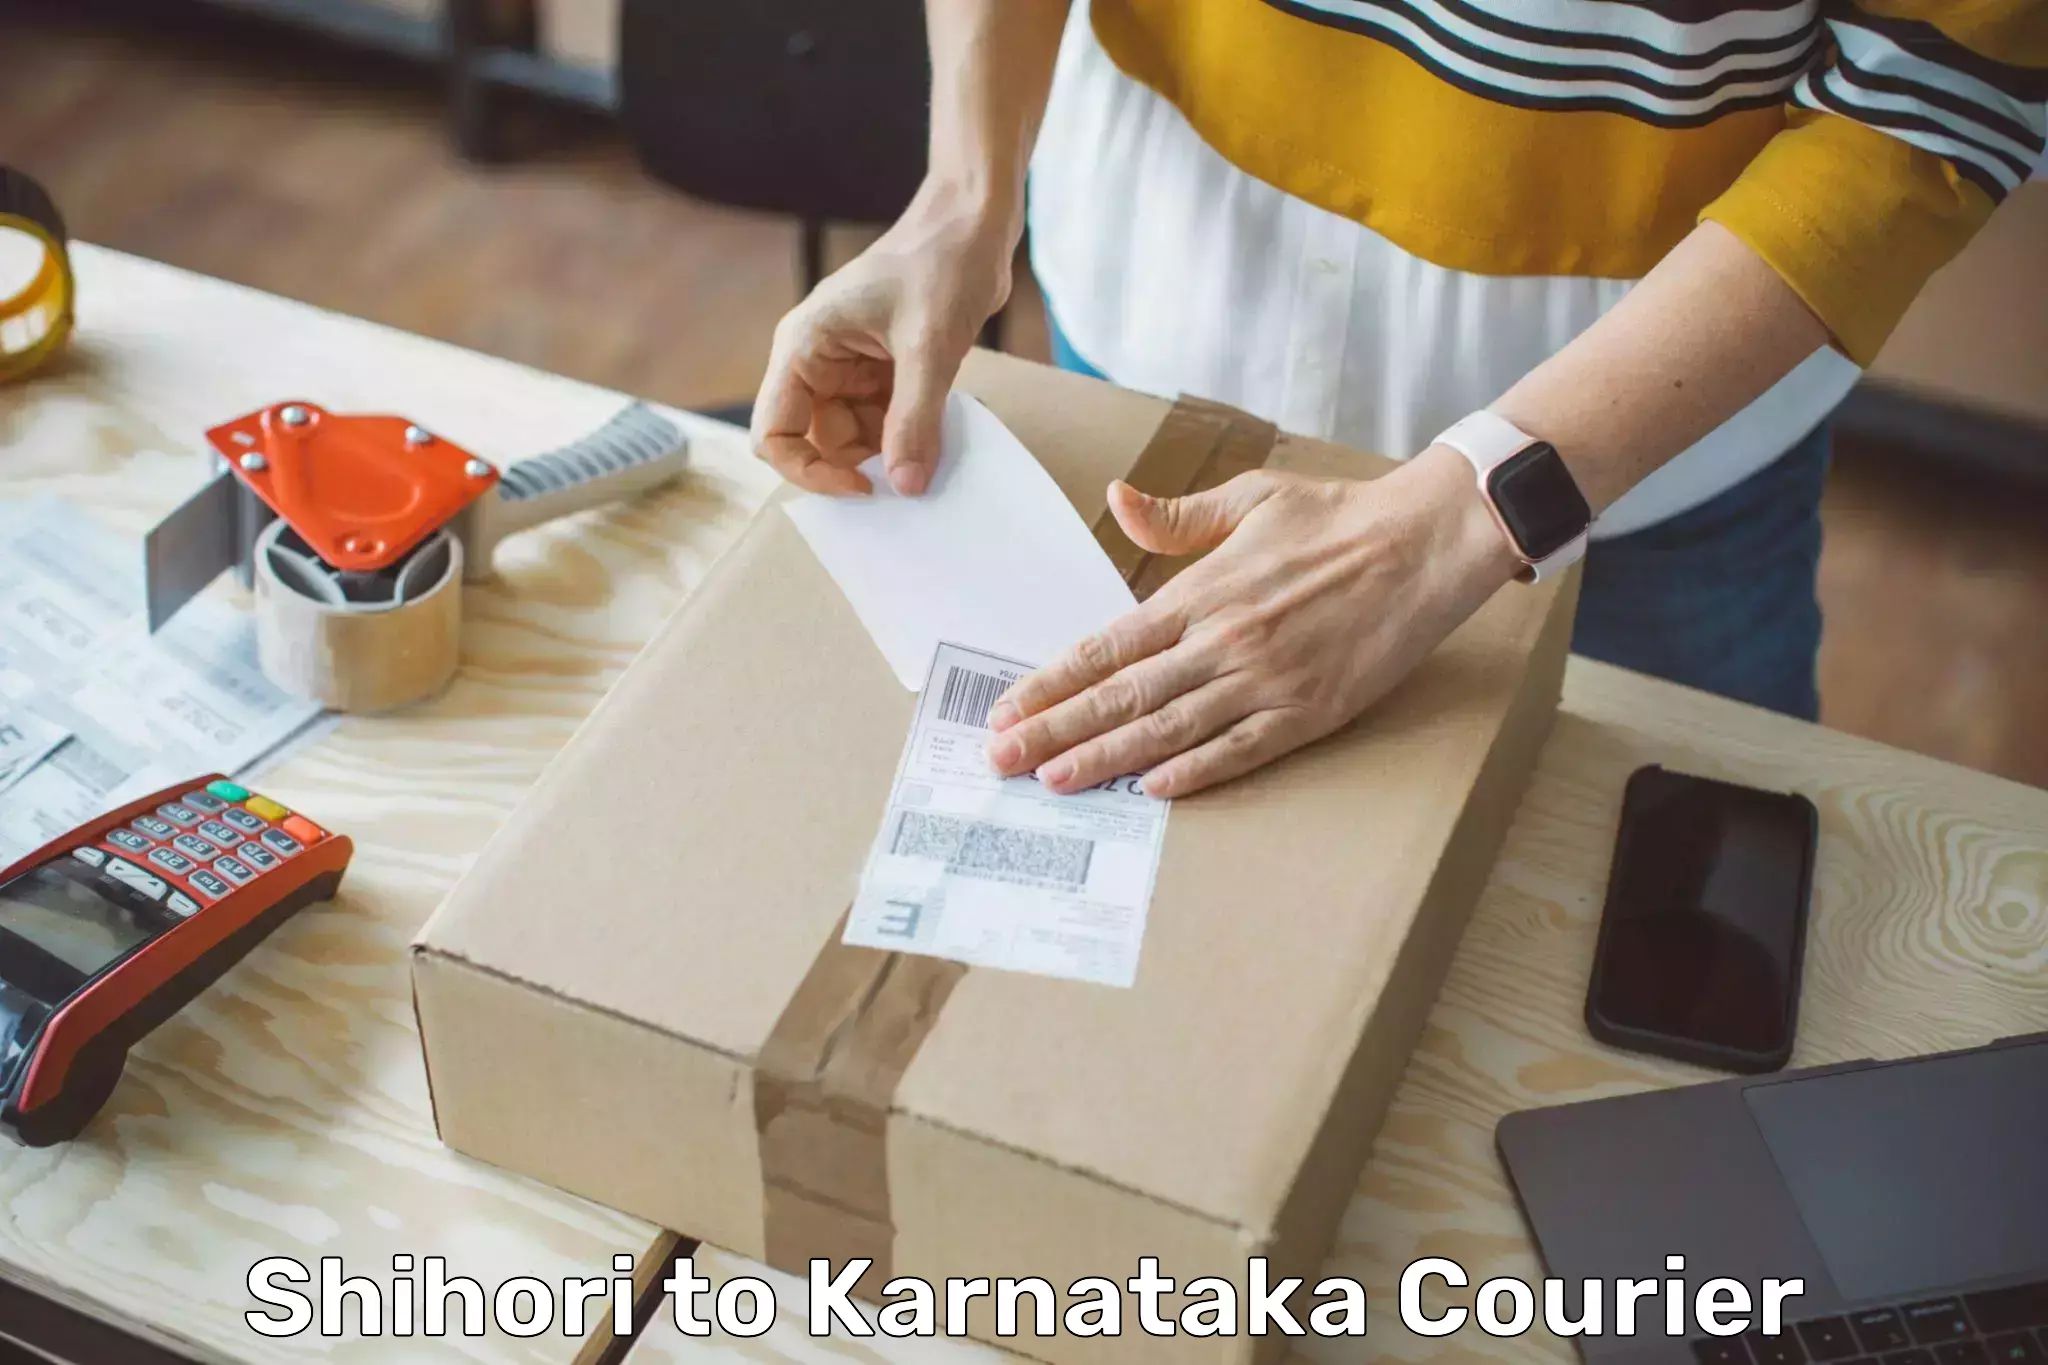 Package forwarding Shihori to Karnataka